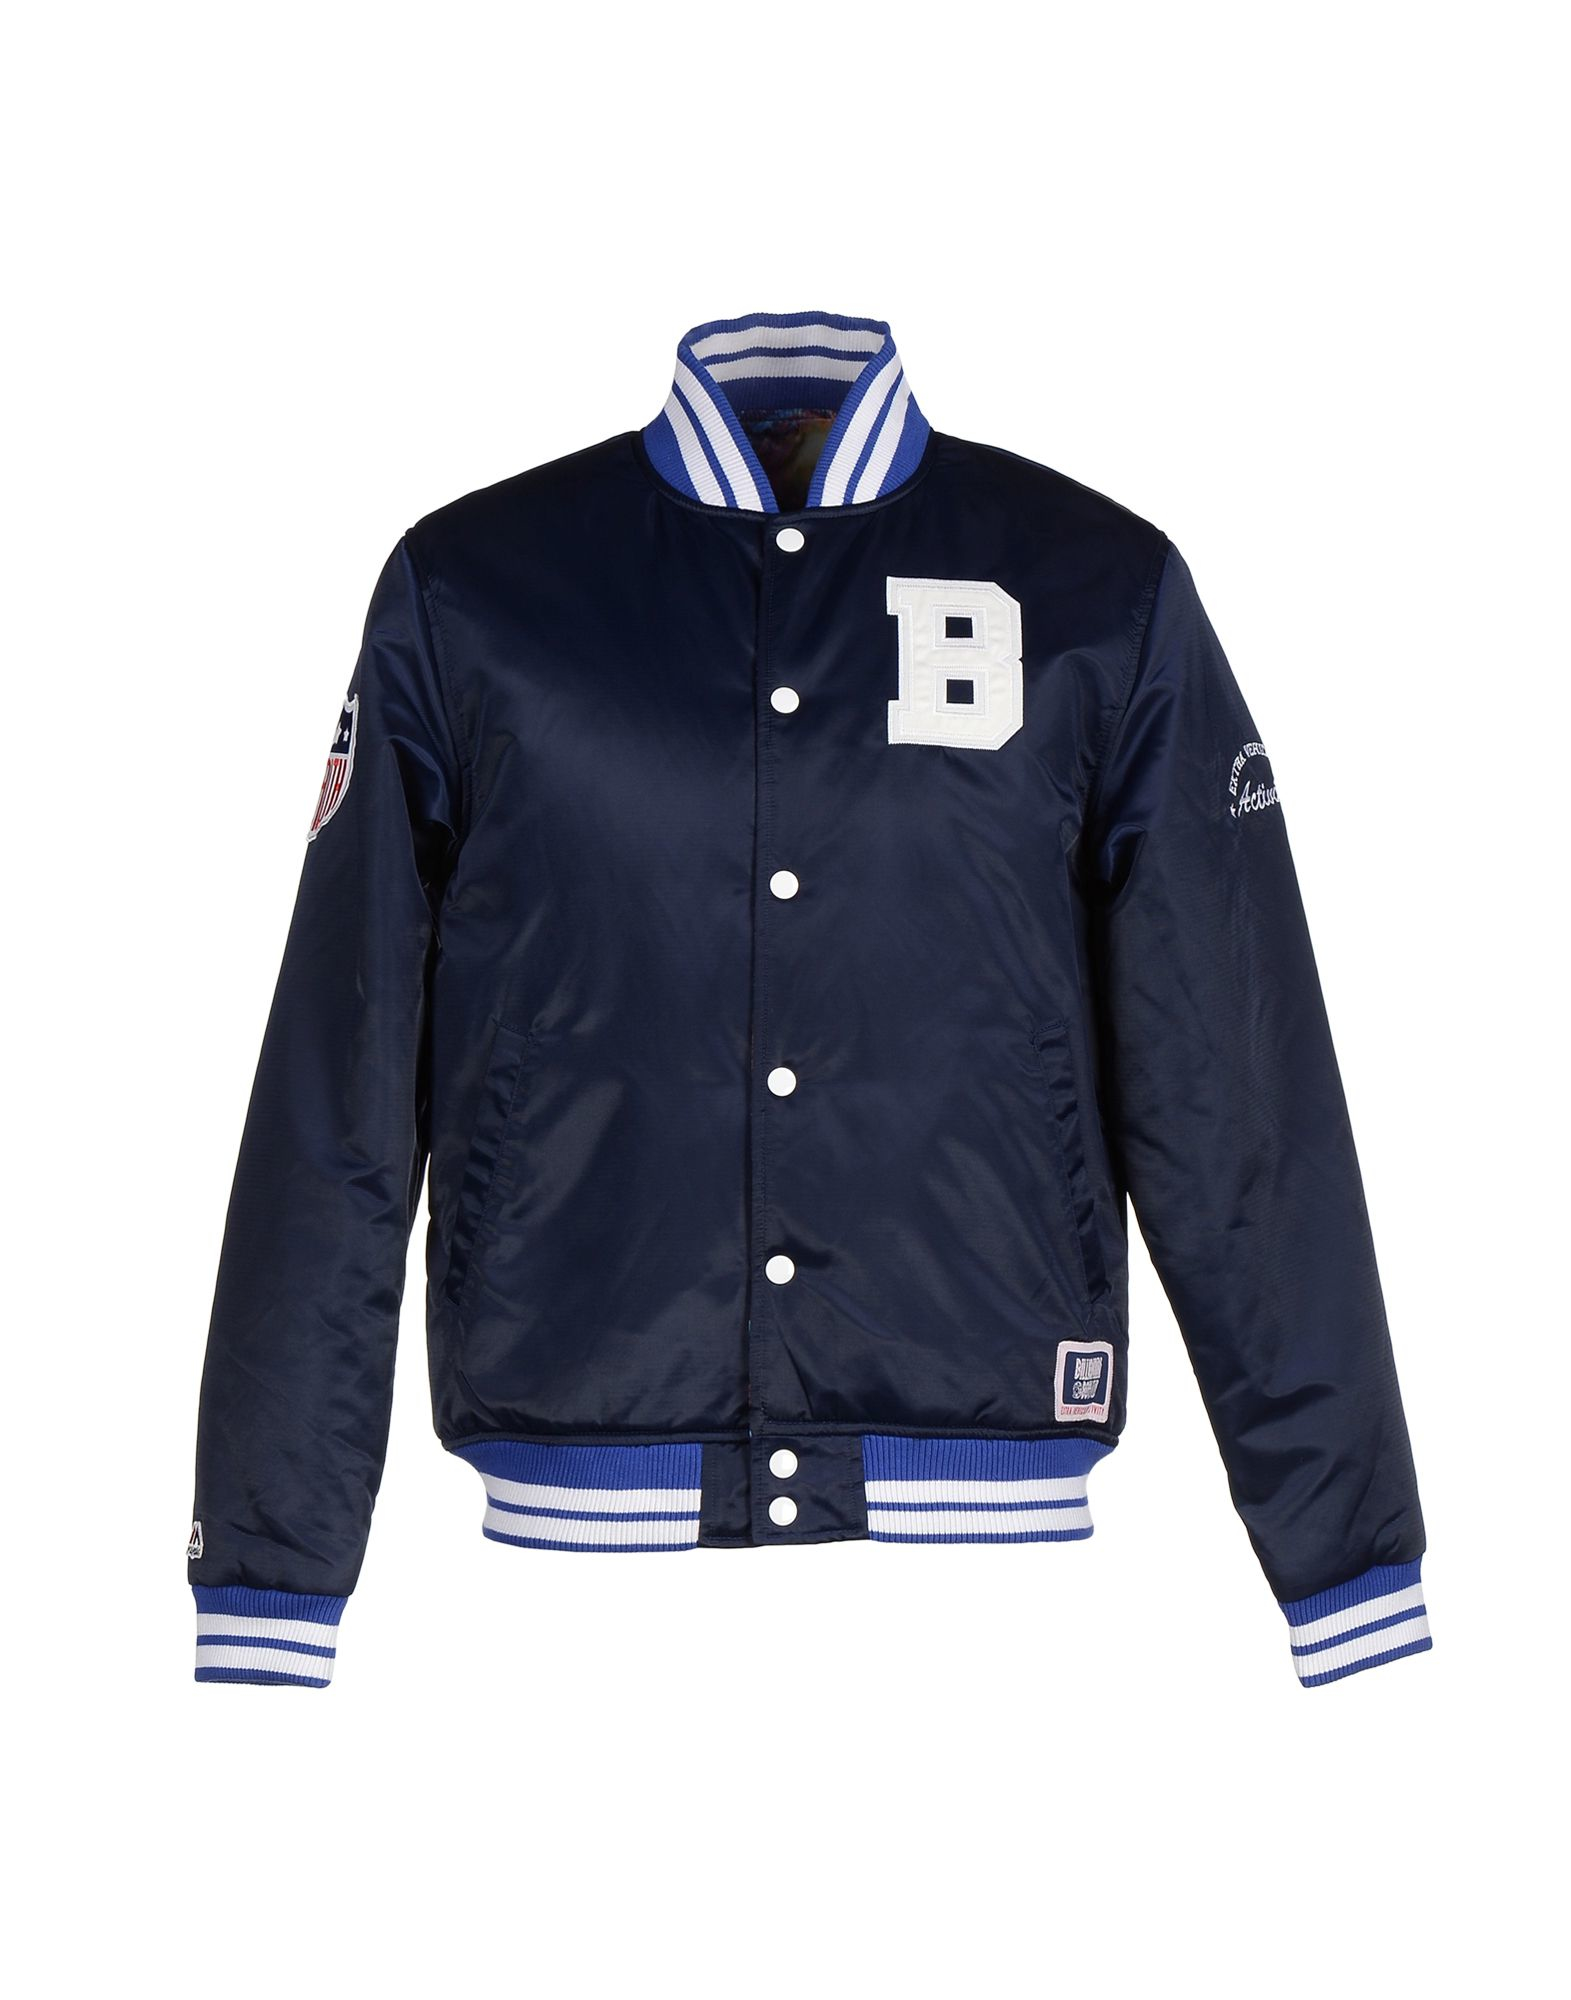 Lyst - Billionaire Boys Club - Ice Cream Jacket in Blue for Men